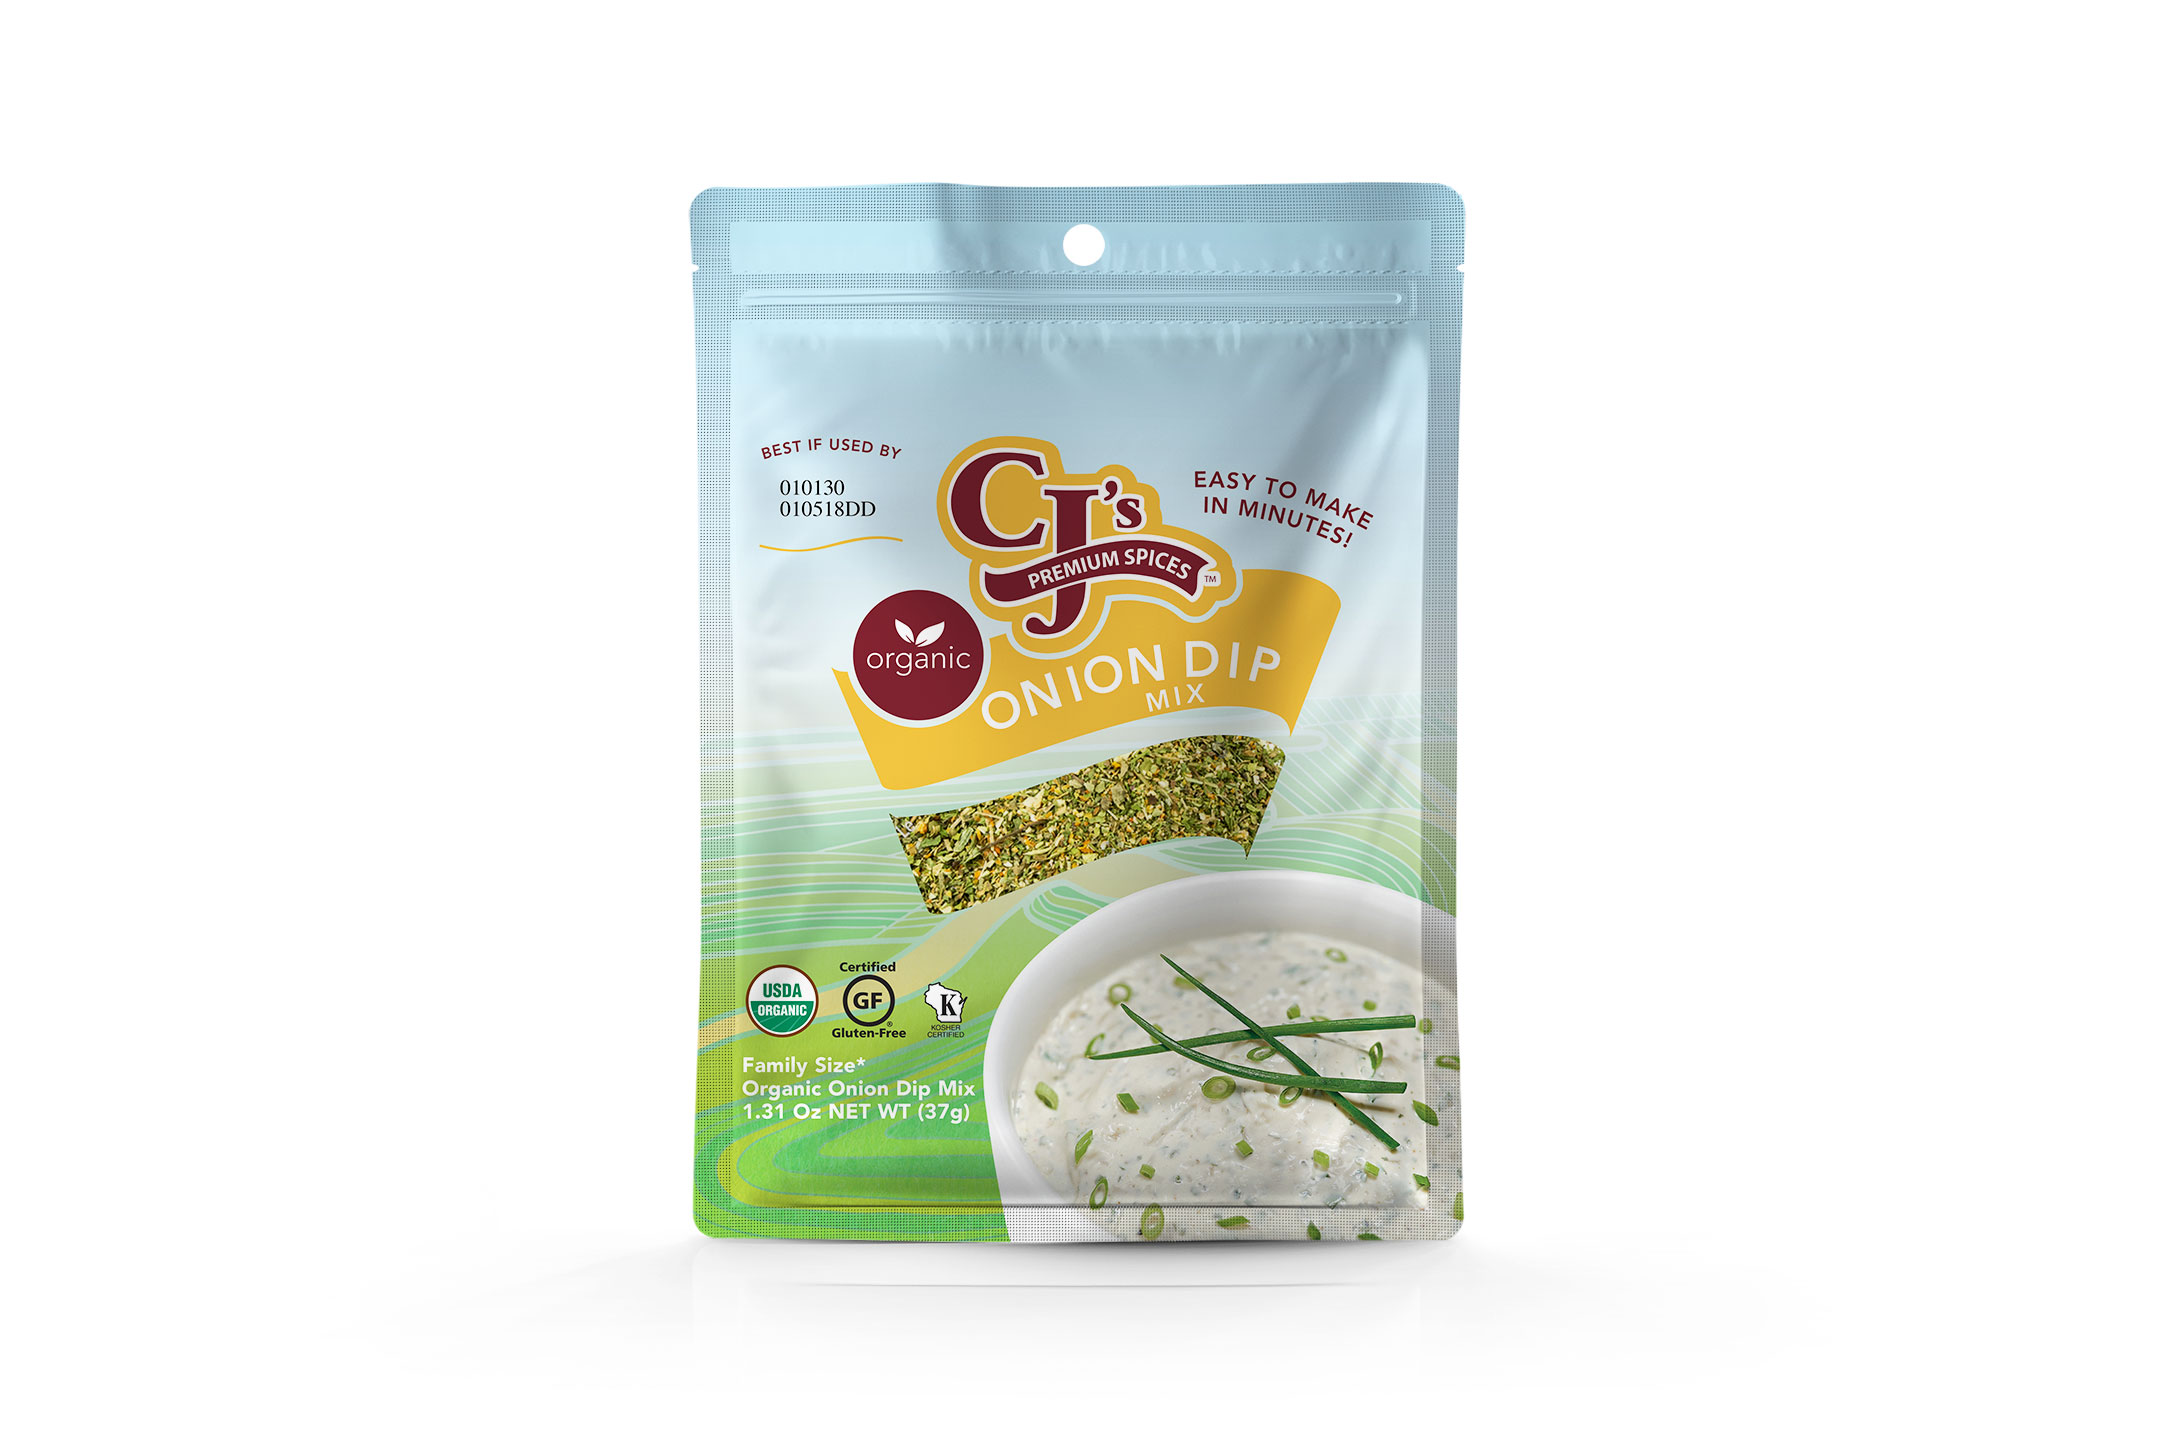 CJ's Organic Onion Dip Mix #1, organic onion dip mix, CJ's organic onion dip mix, kosher, gluten free certified, delicious, onion soup alternative, clean label